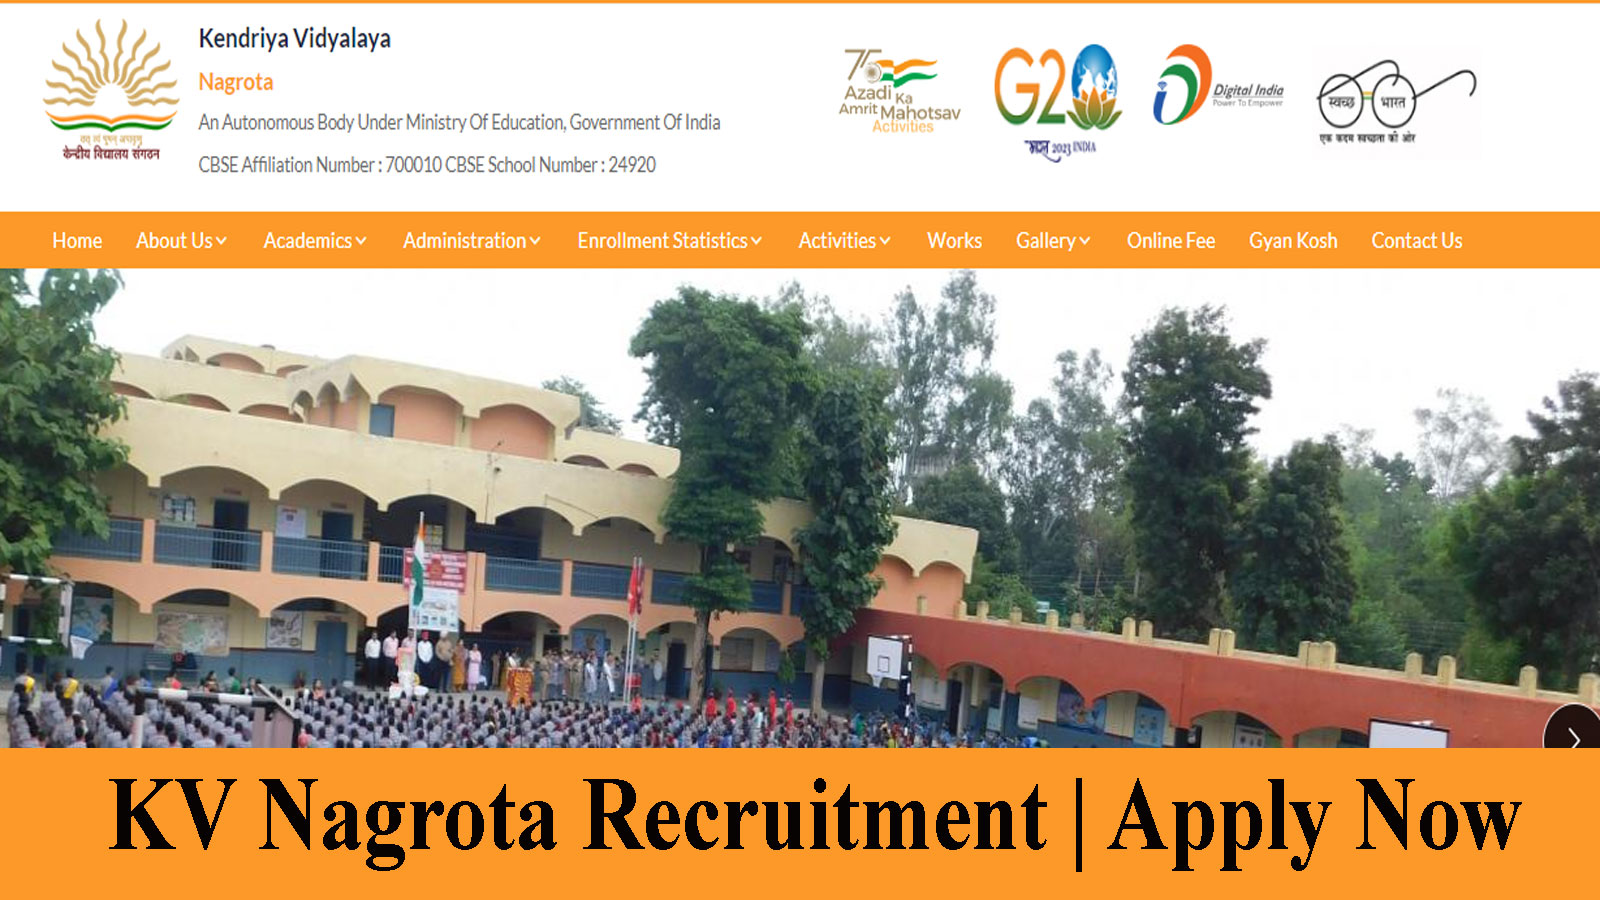 KV Nagrota Recruitment for Special Educator, Download Application Form here